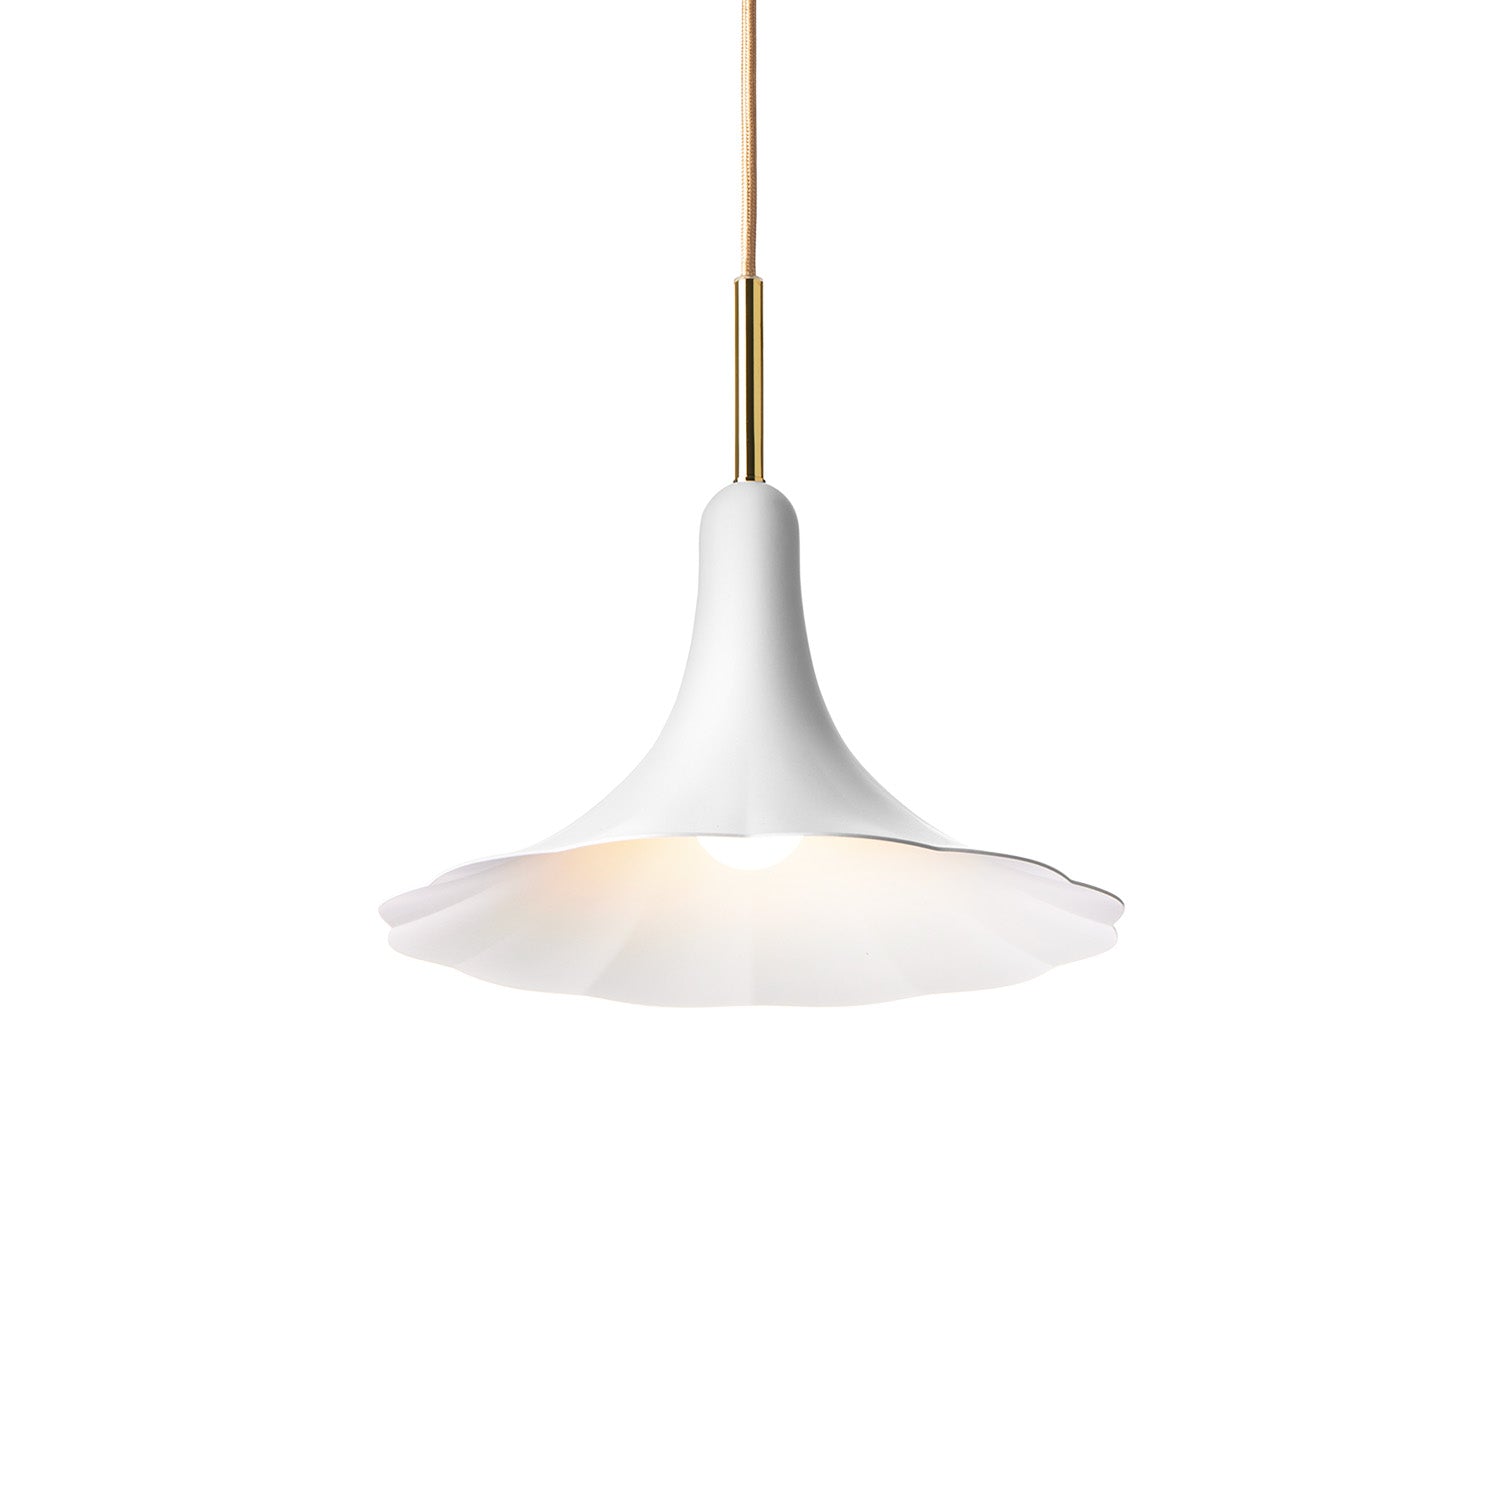 PETALII 1 - Elegant white and polished gold flower pendant light